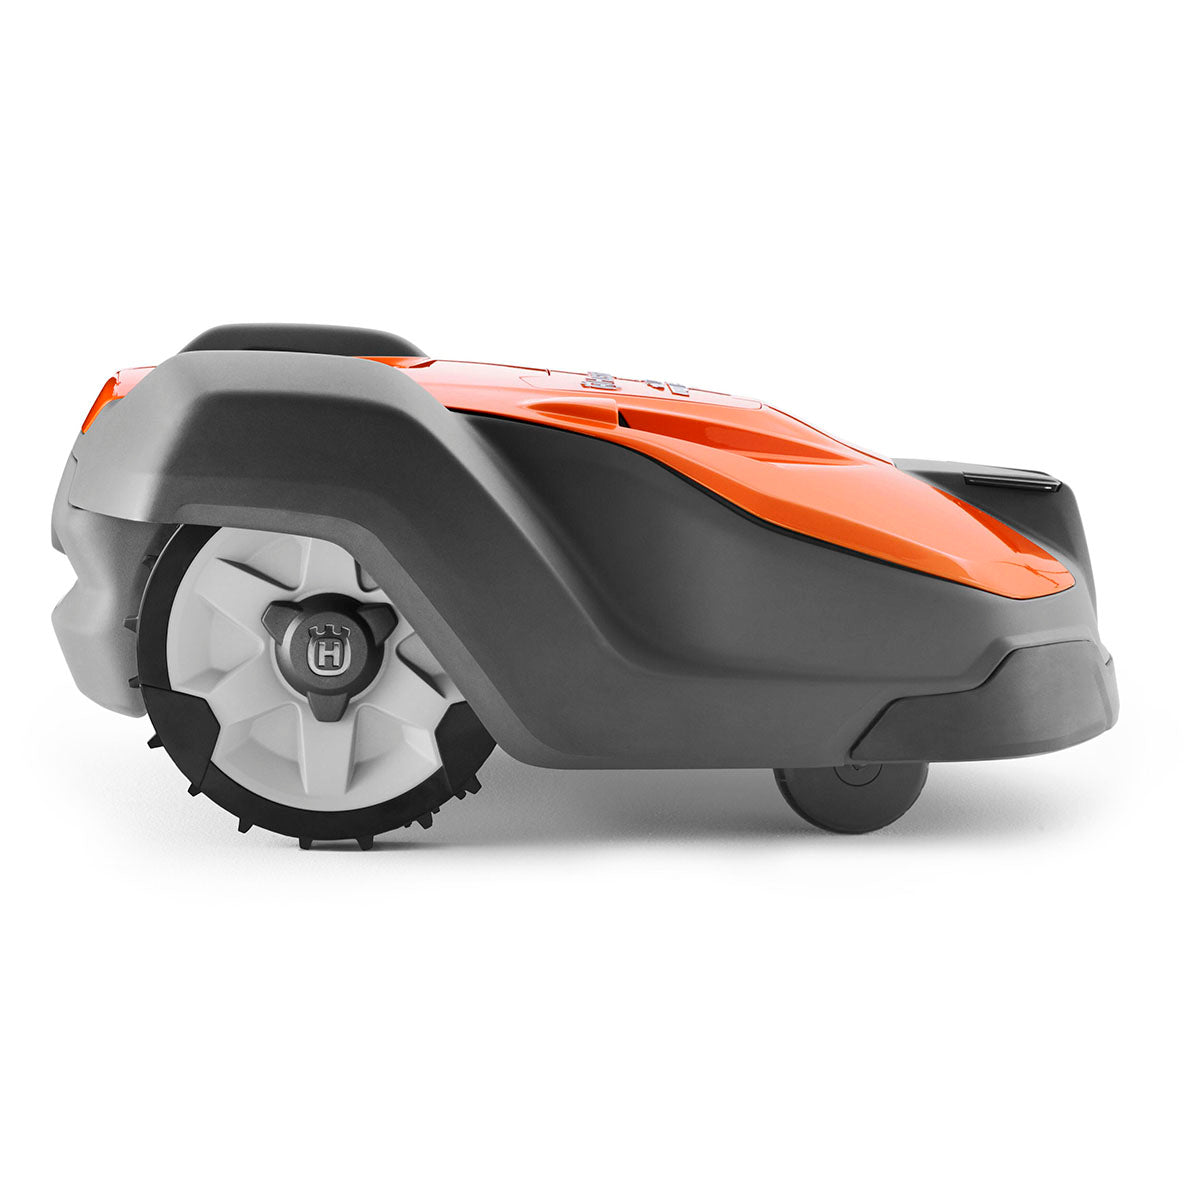 Husqvarna Automower 550 Robotic Lawn Mower